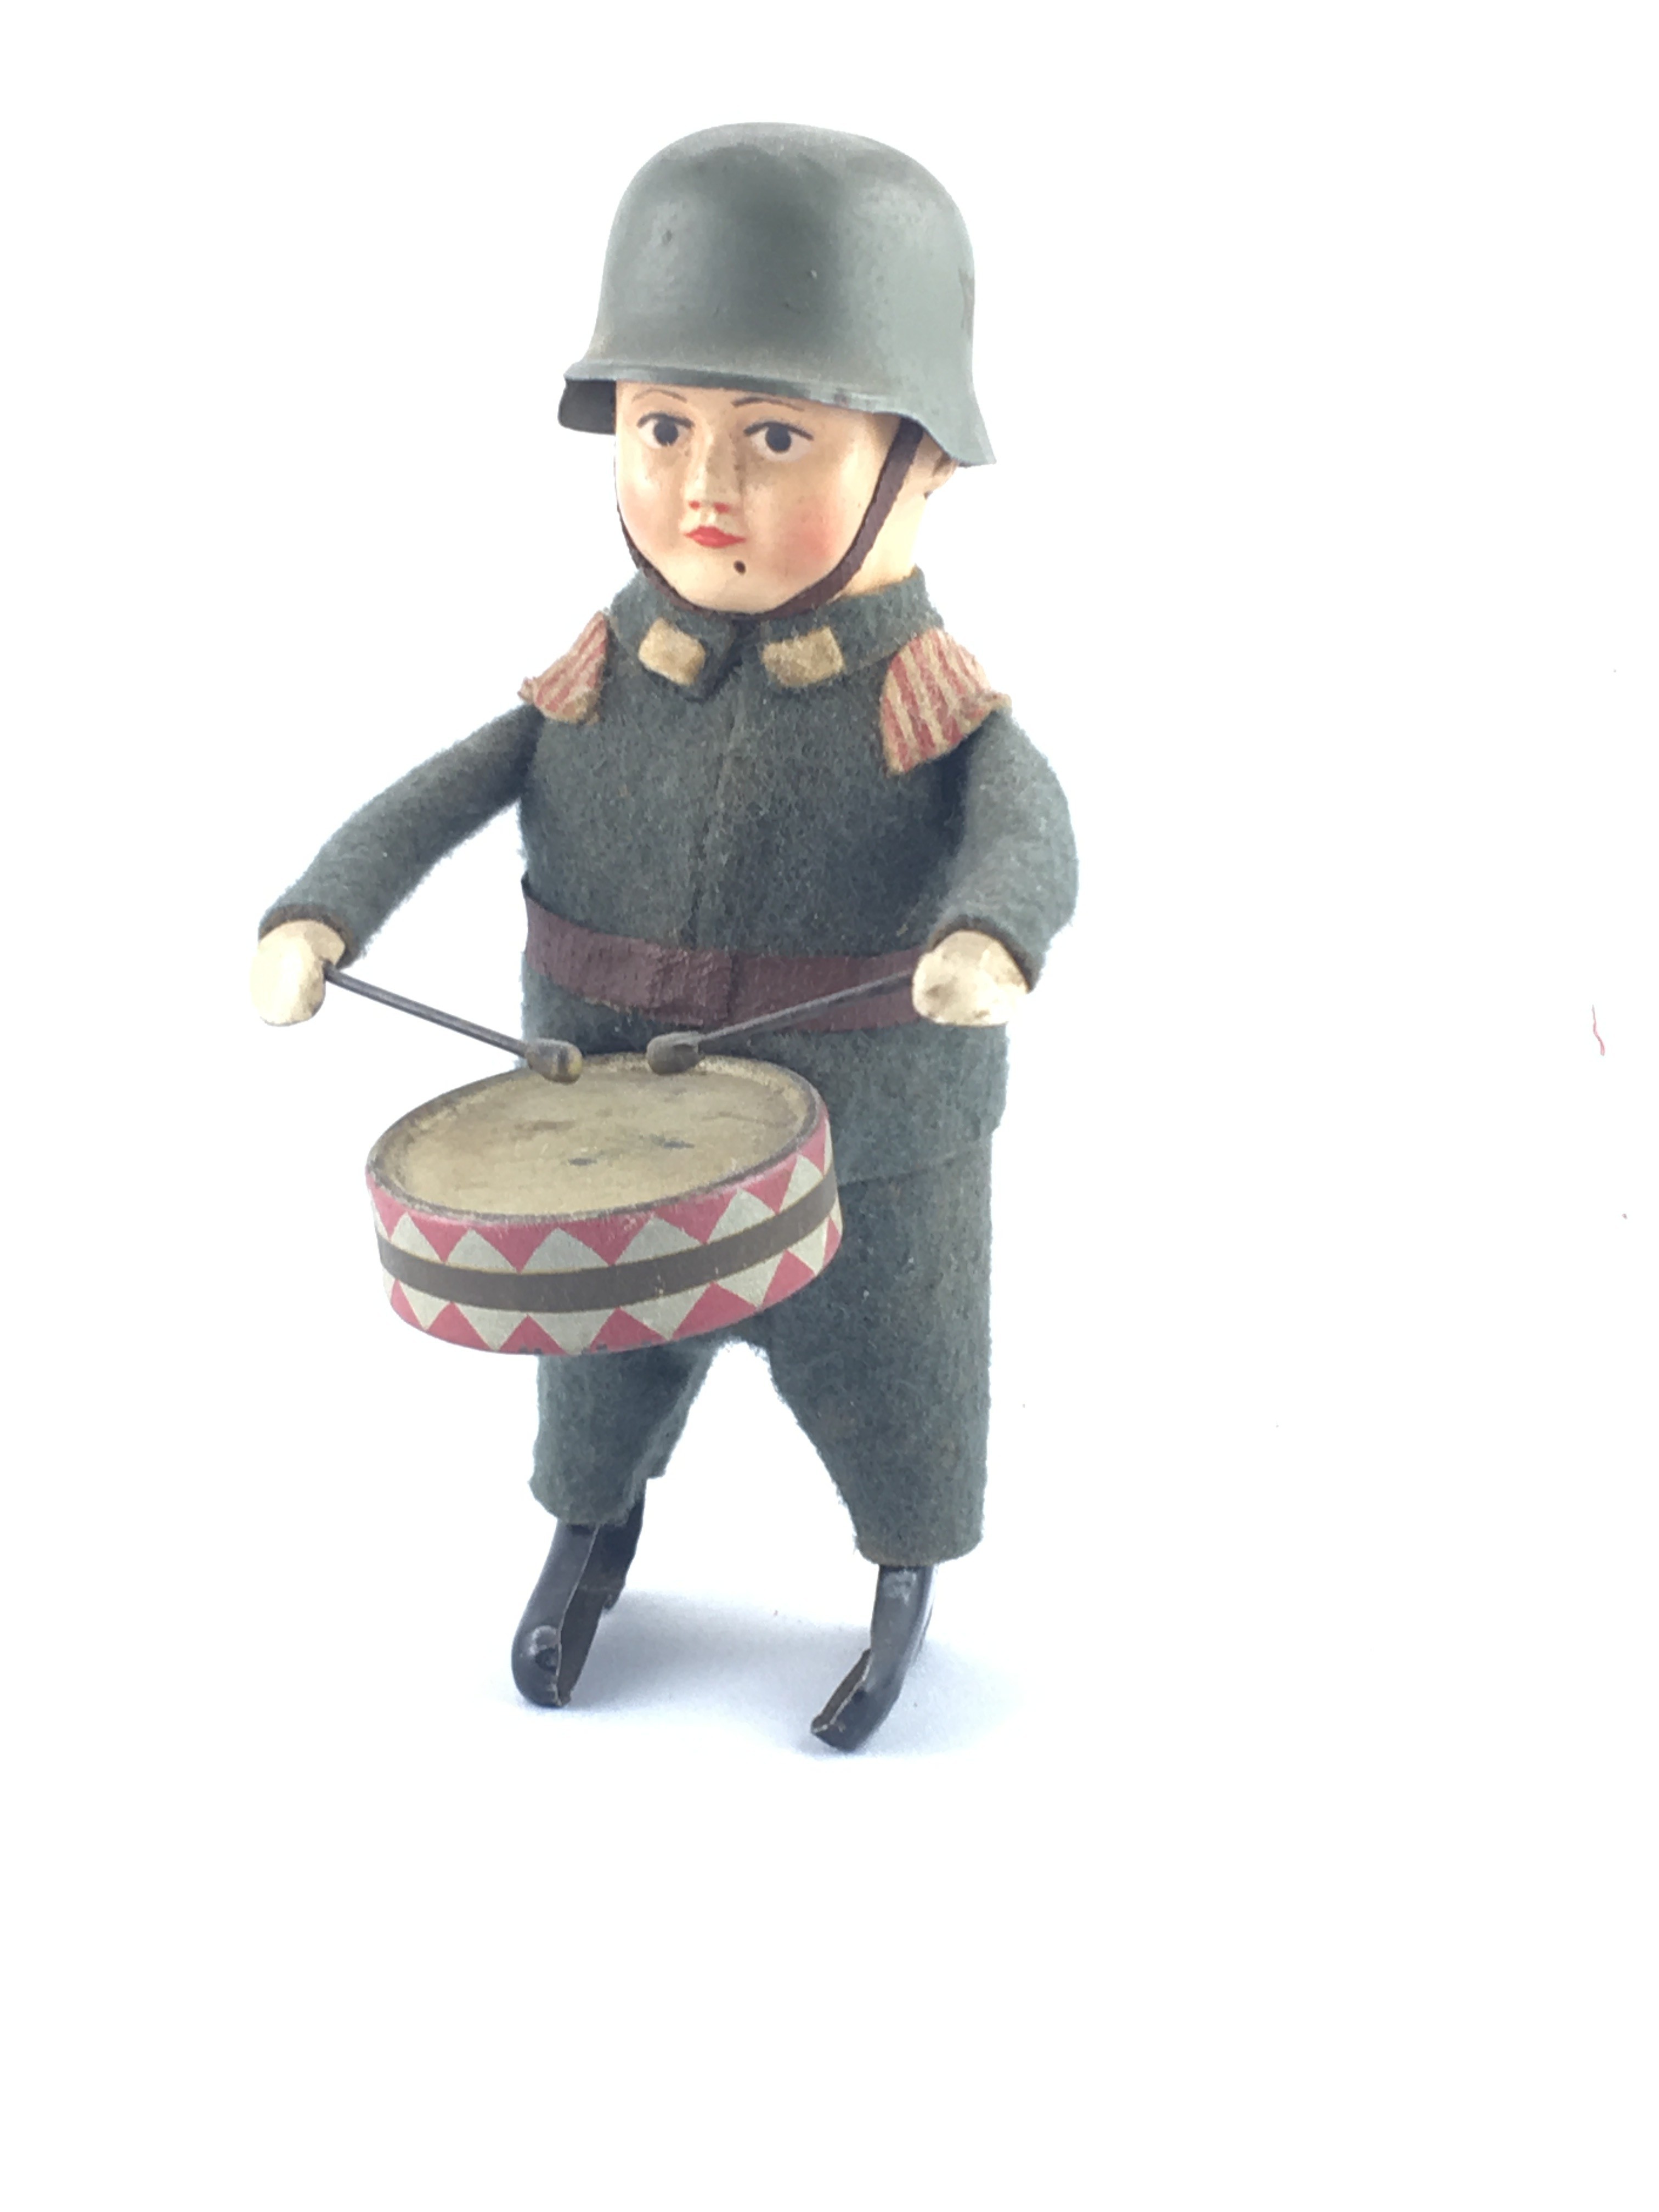 Der Trommler (Historisches Spielzeug Berlin e.V. CC BY-NC-SA)